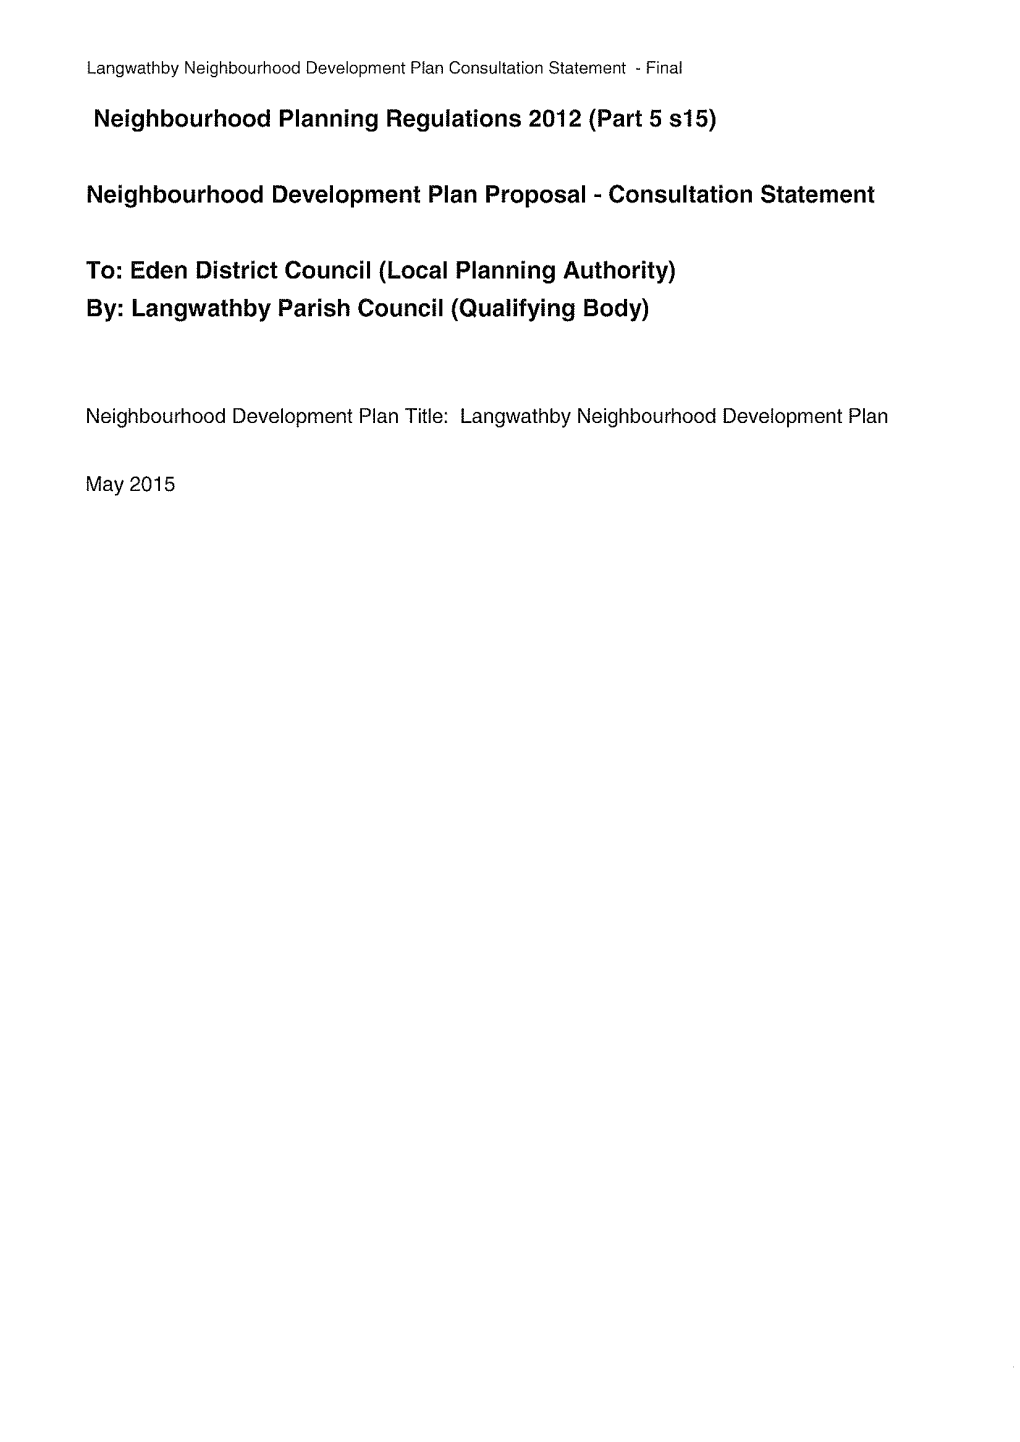 Langwathby Neighbourhood Plan Consultation Statement